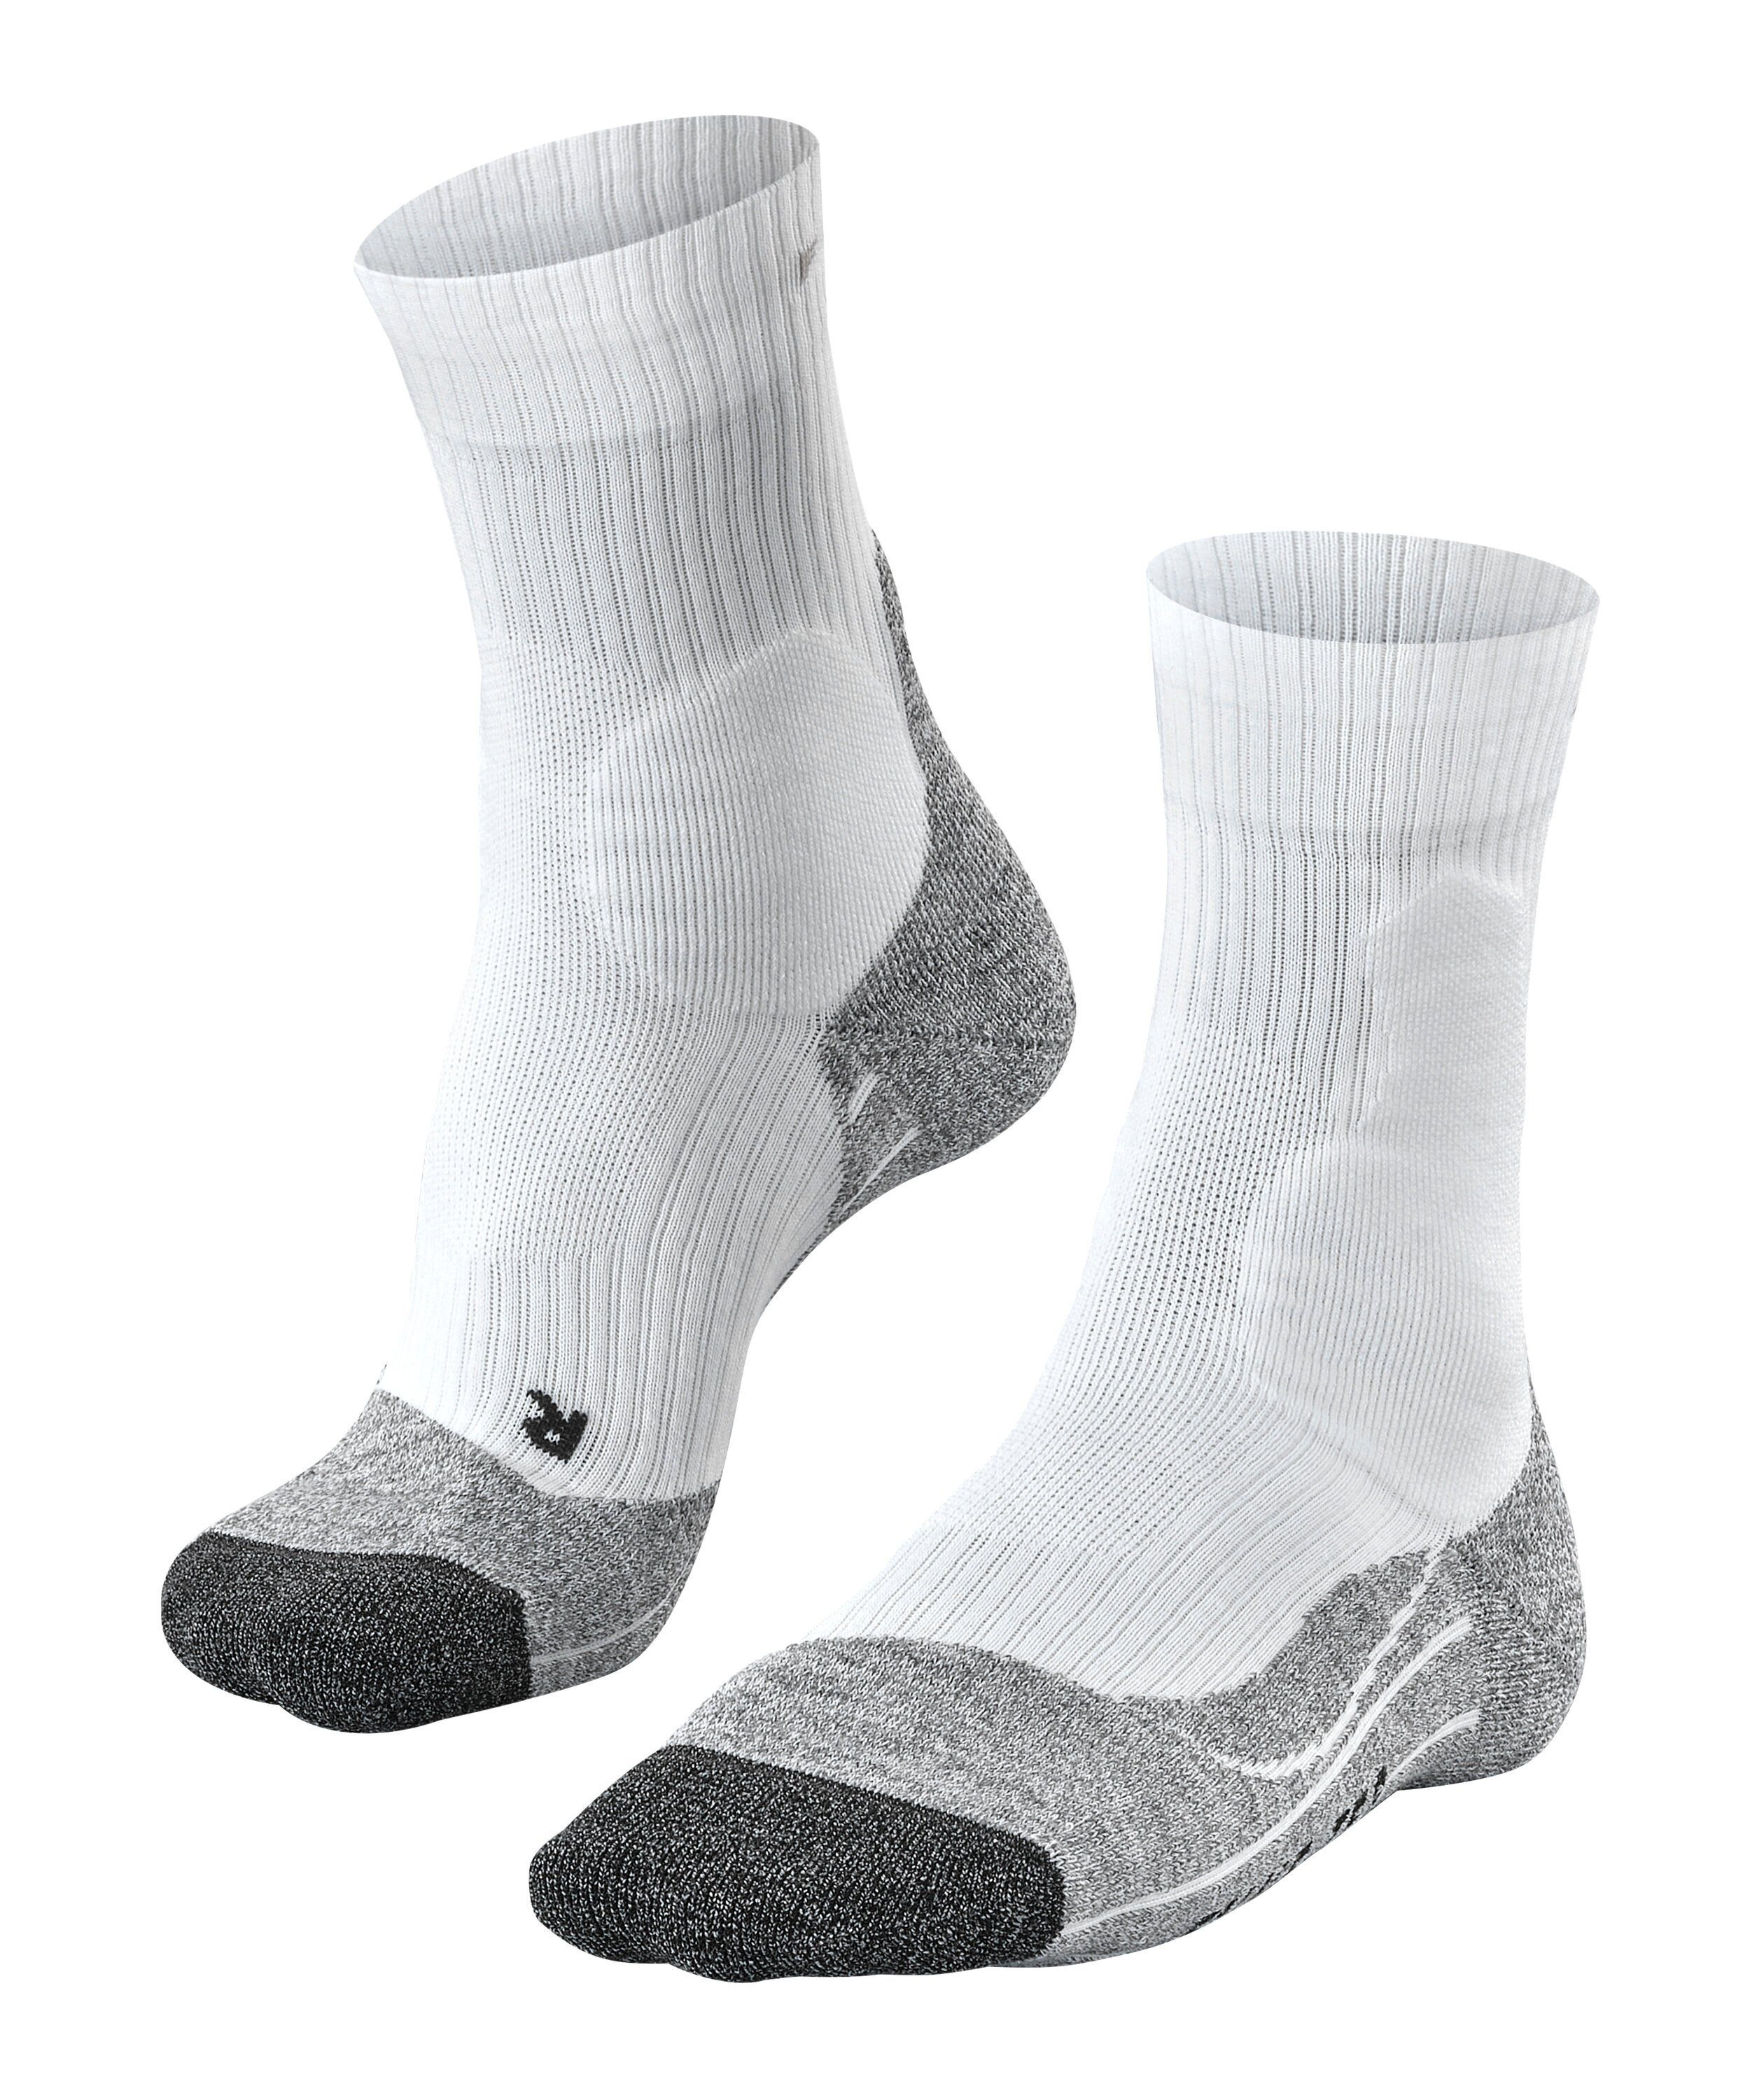 FALKE Tennissocken TE2 Stabilisierende Socken für Hartplätze